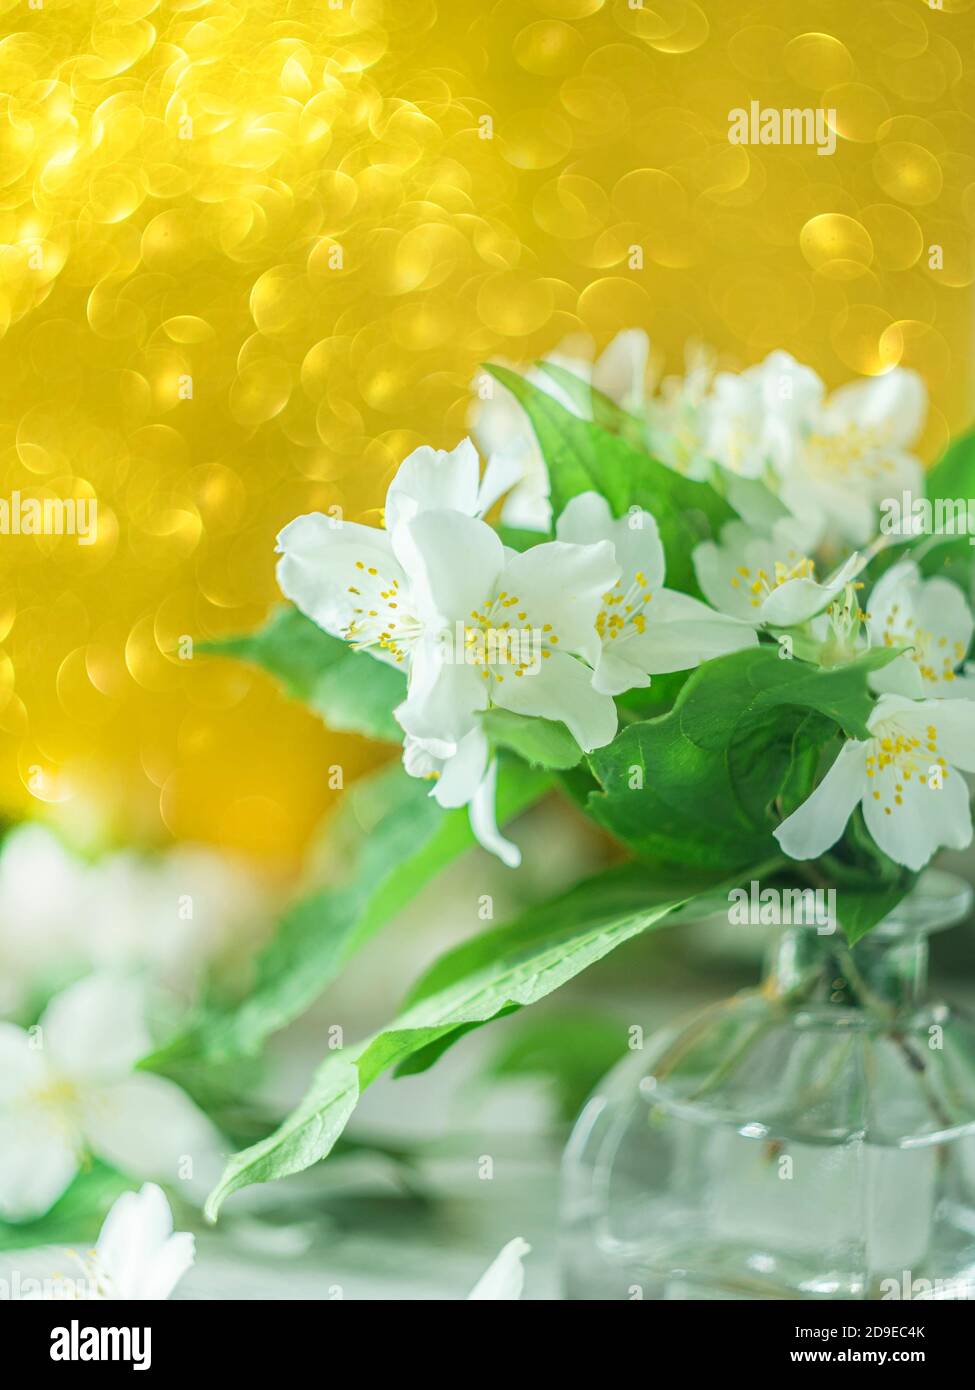 Fresh jasmine flowers in a vase on background bokeh. Stock Photo